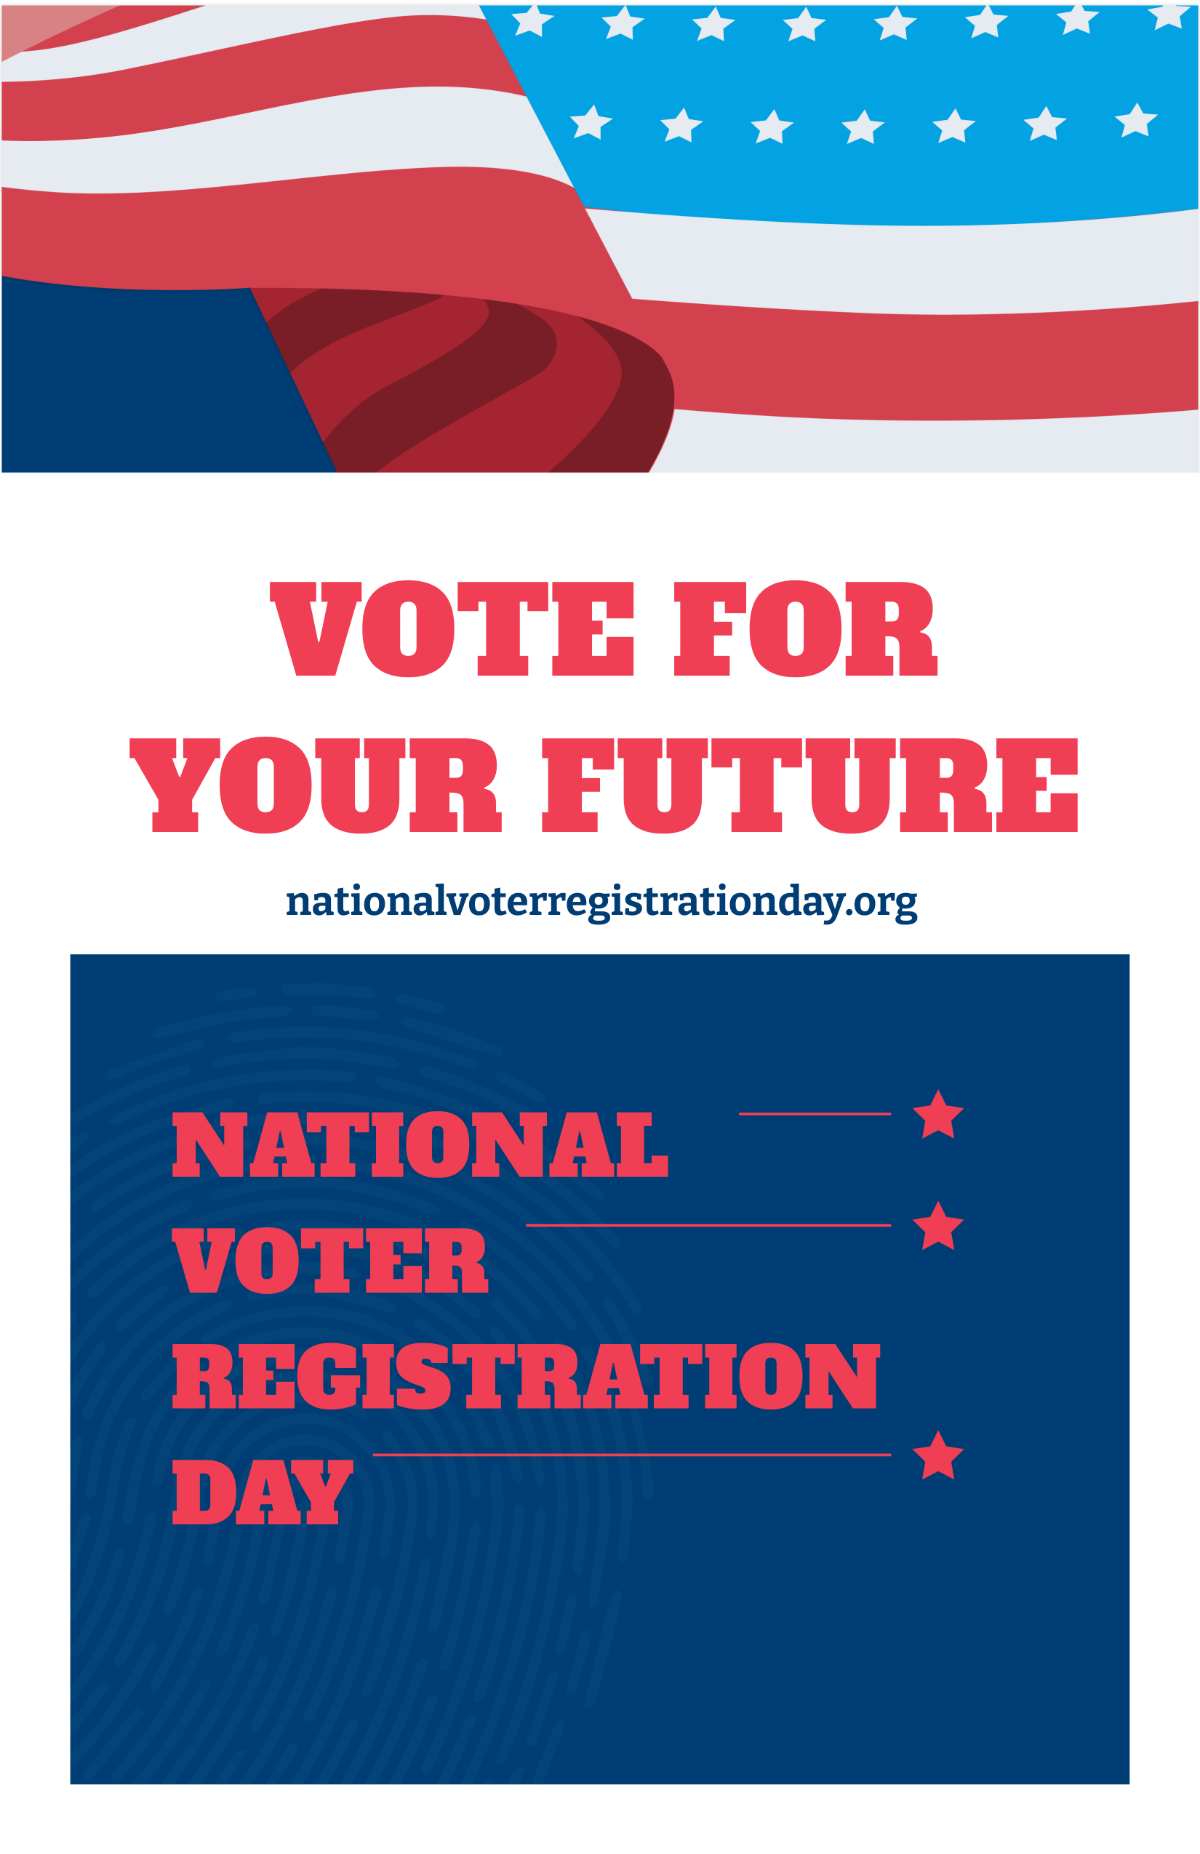 National Voter Registration Day Poster Template